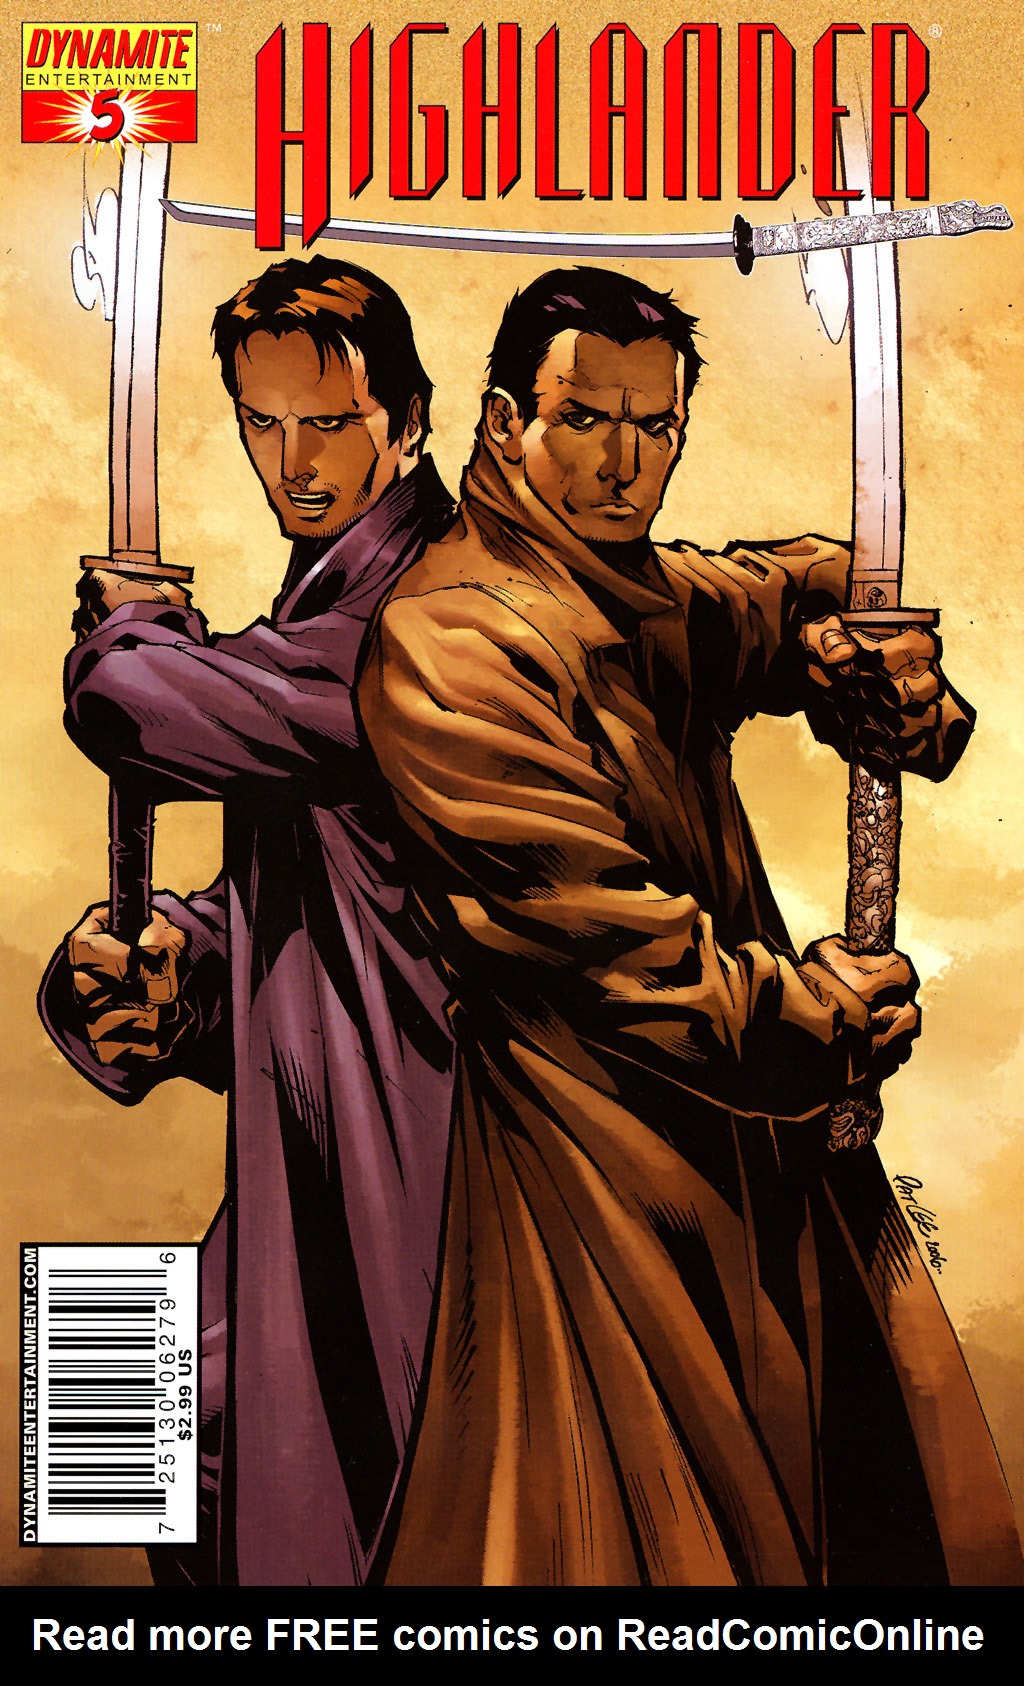 Read online Highlander comic -  Issue #5 - 2